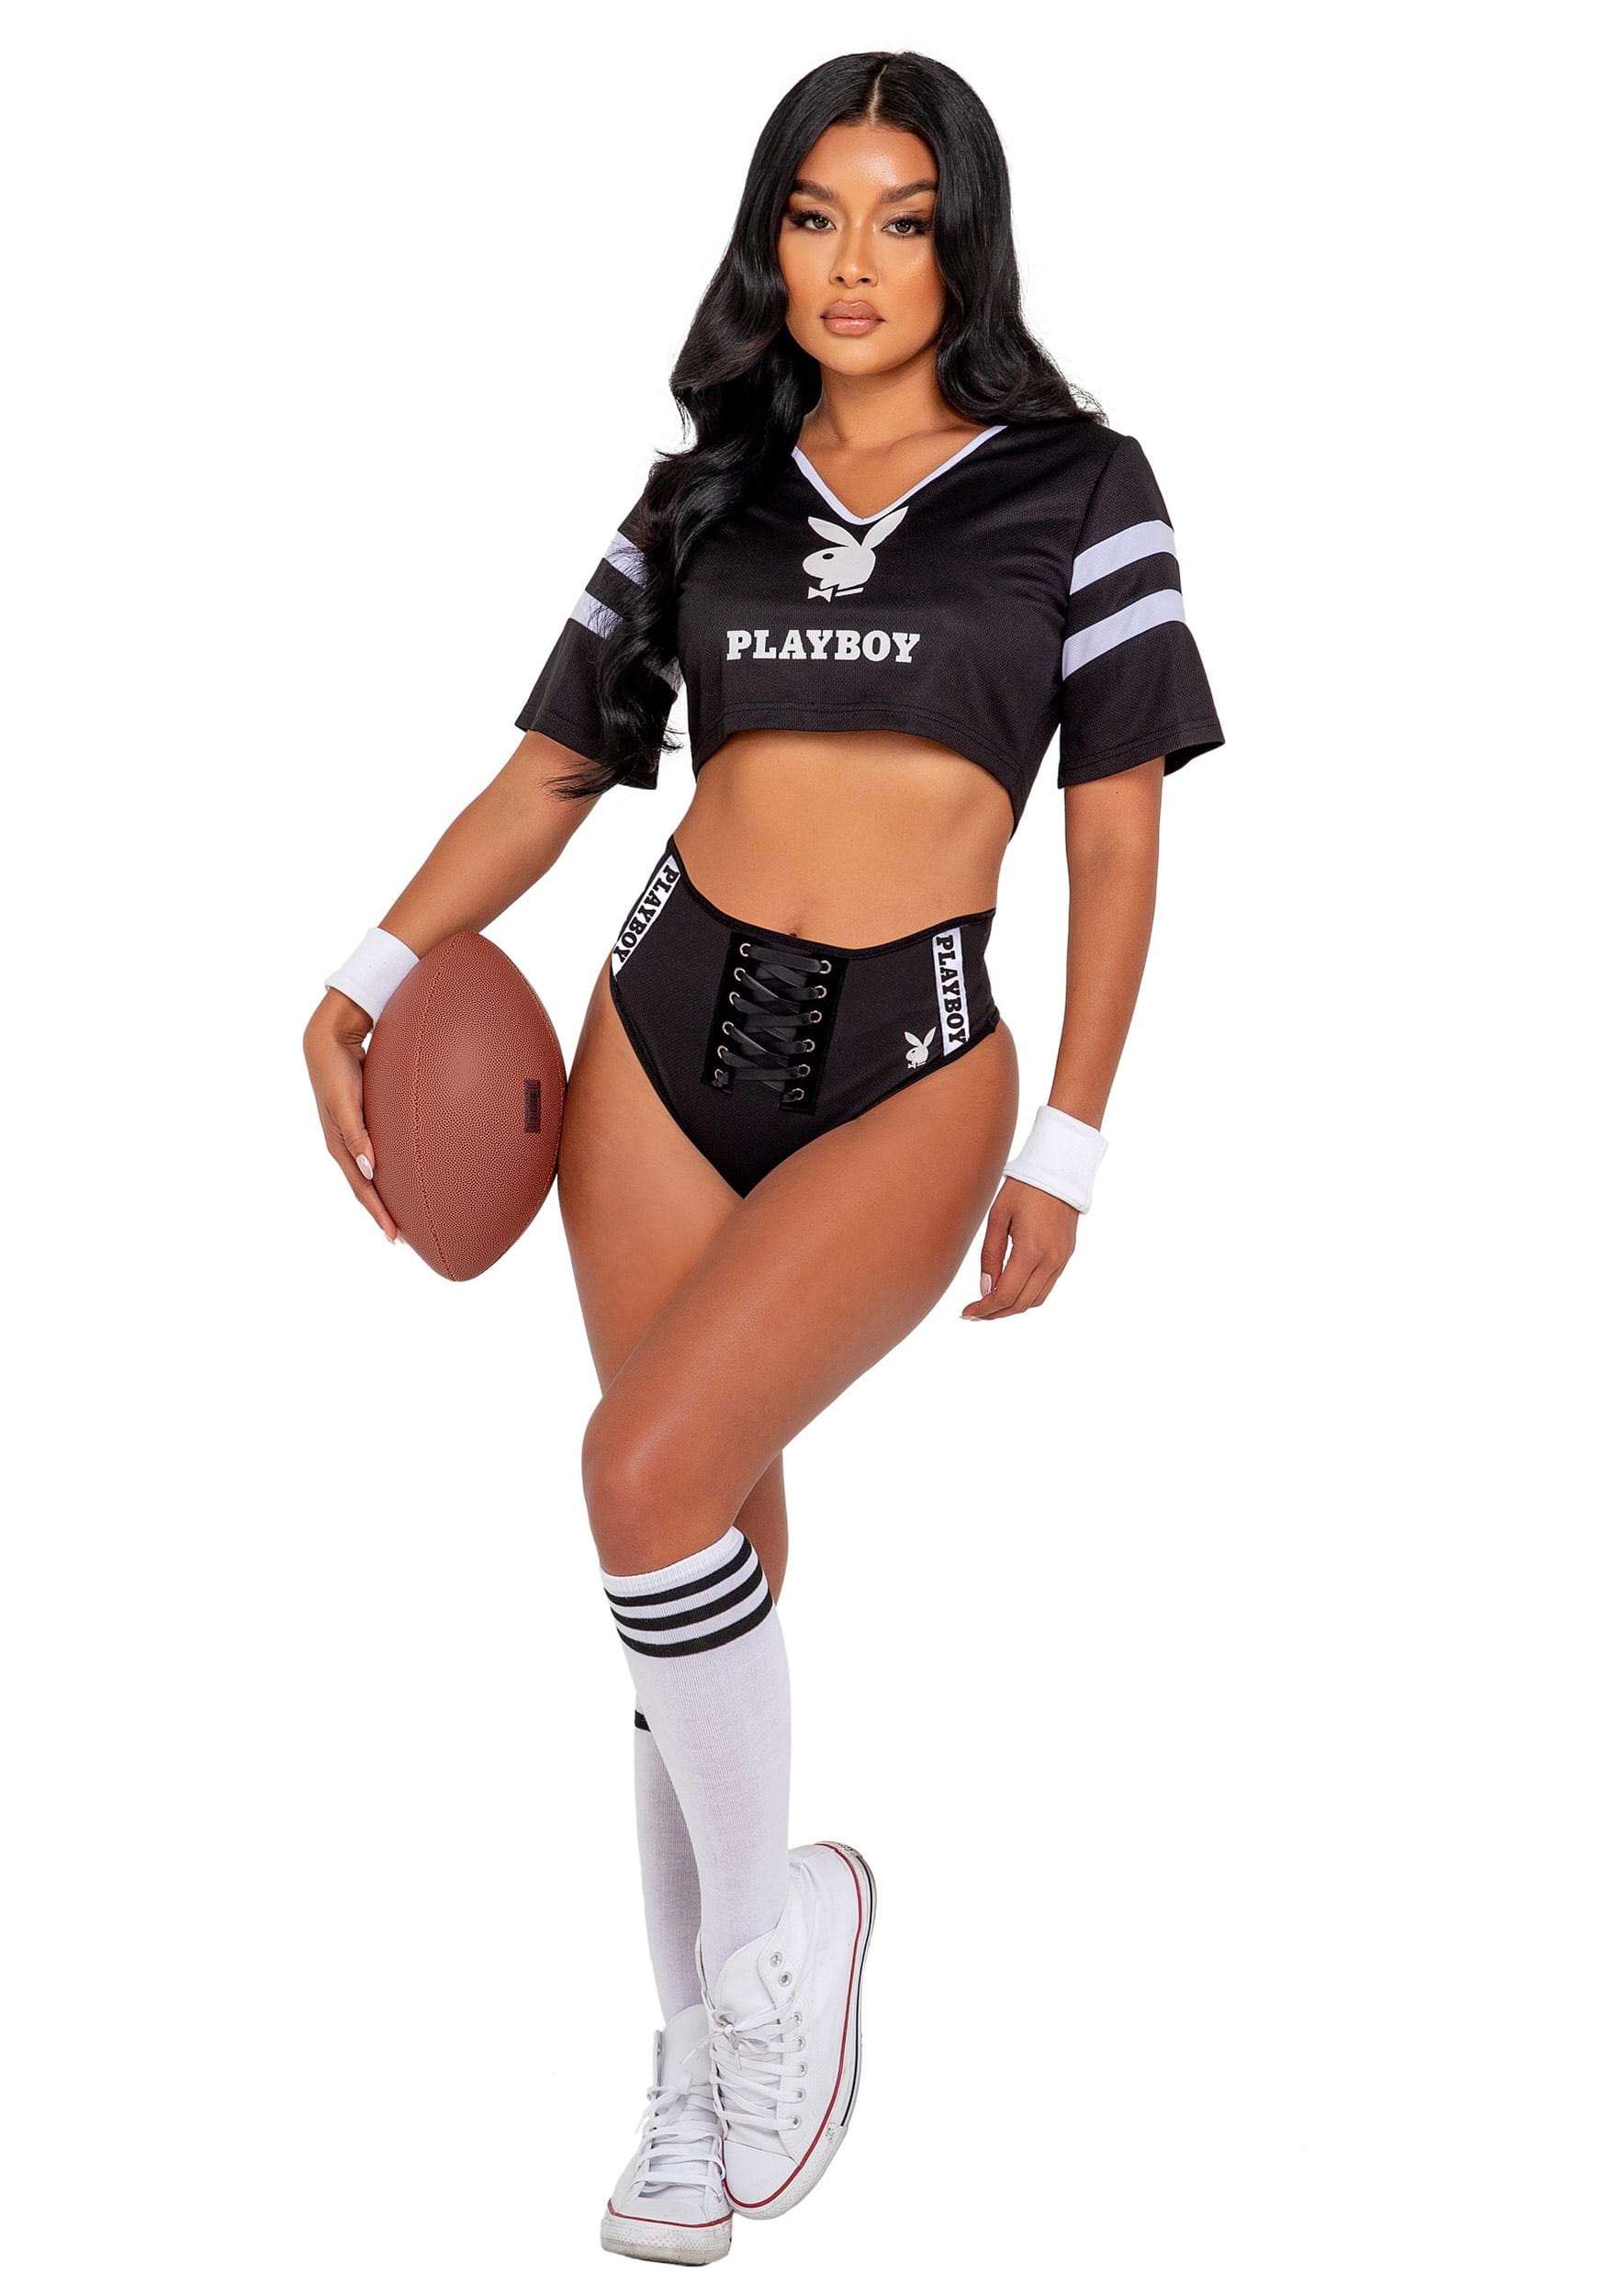 Image of Playboy Women's Football Costume ID ROPB140-L